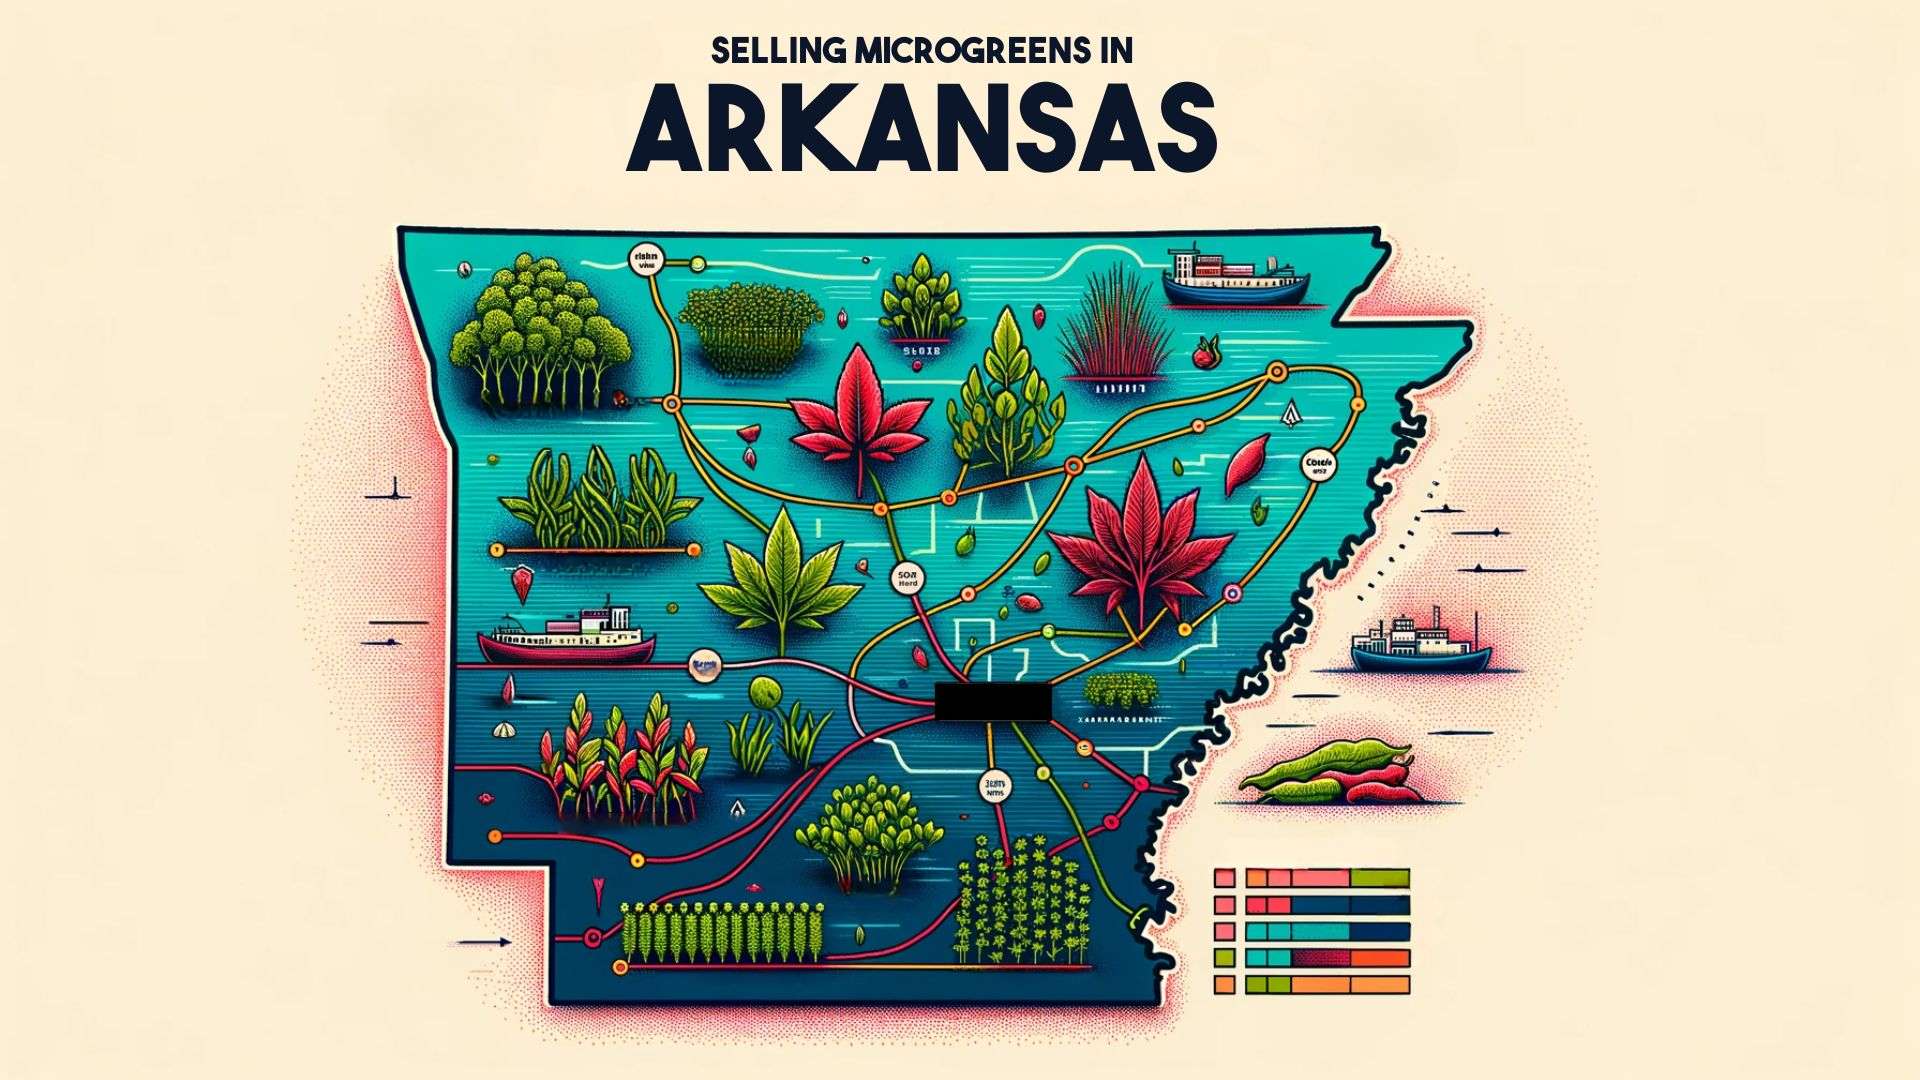 Regulations For Selling Microgreens In Arkansas